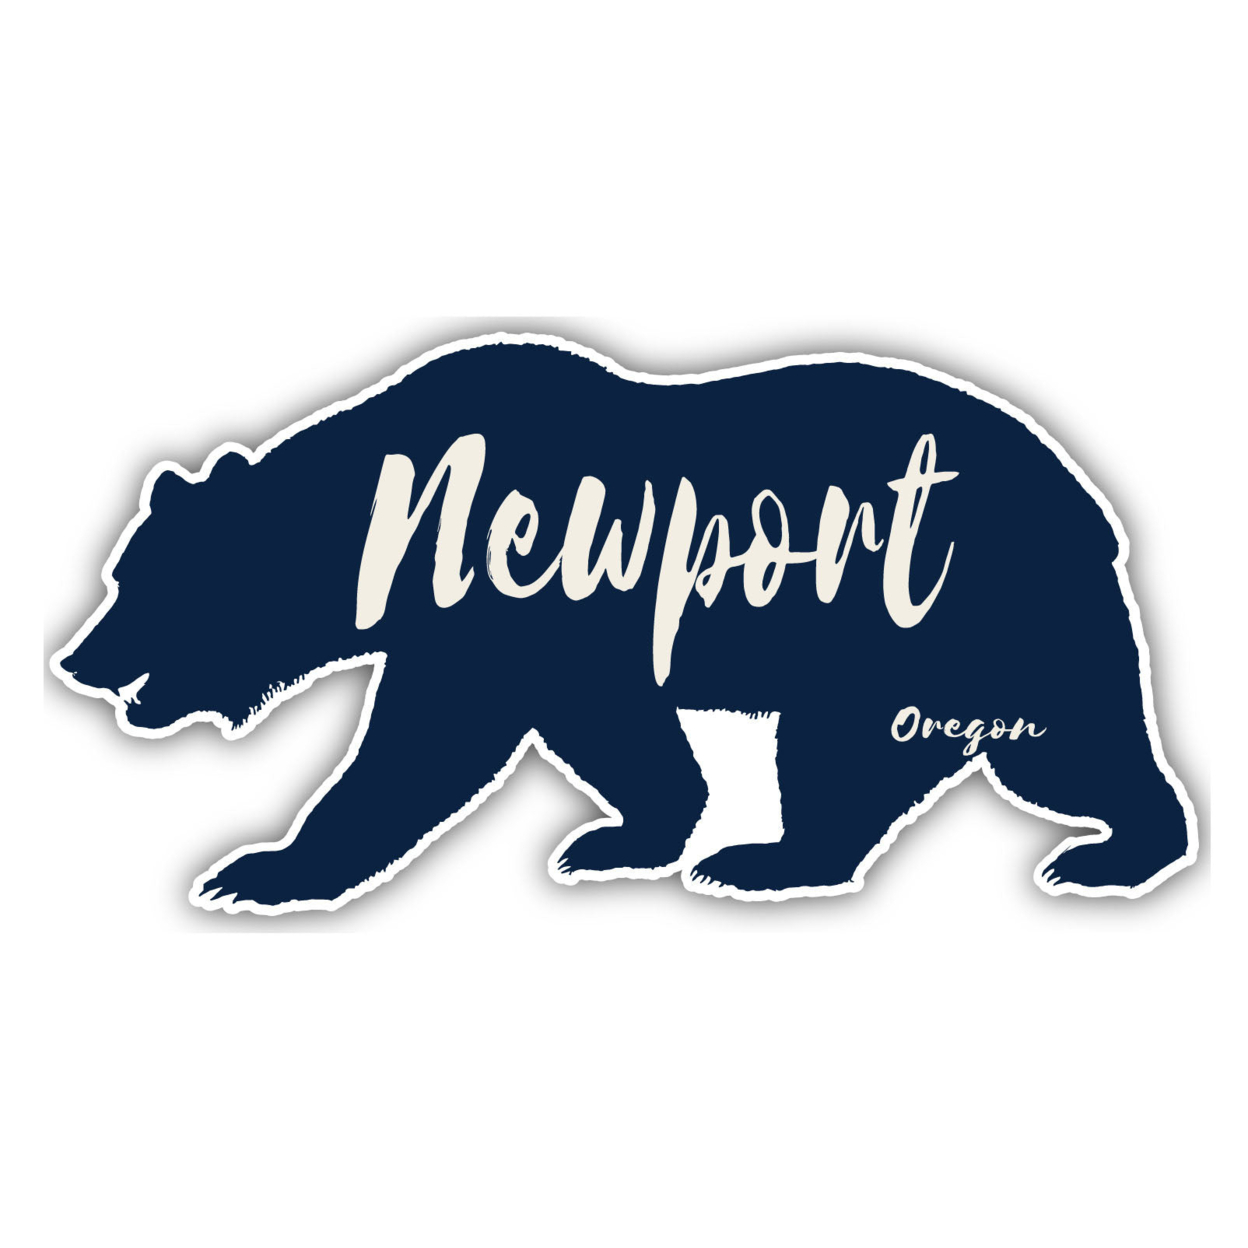 Newport Oregon Souvenir Decorative Stickers (Choose Theme And Size) - Single Unit, 4-Inch, Tent